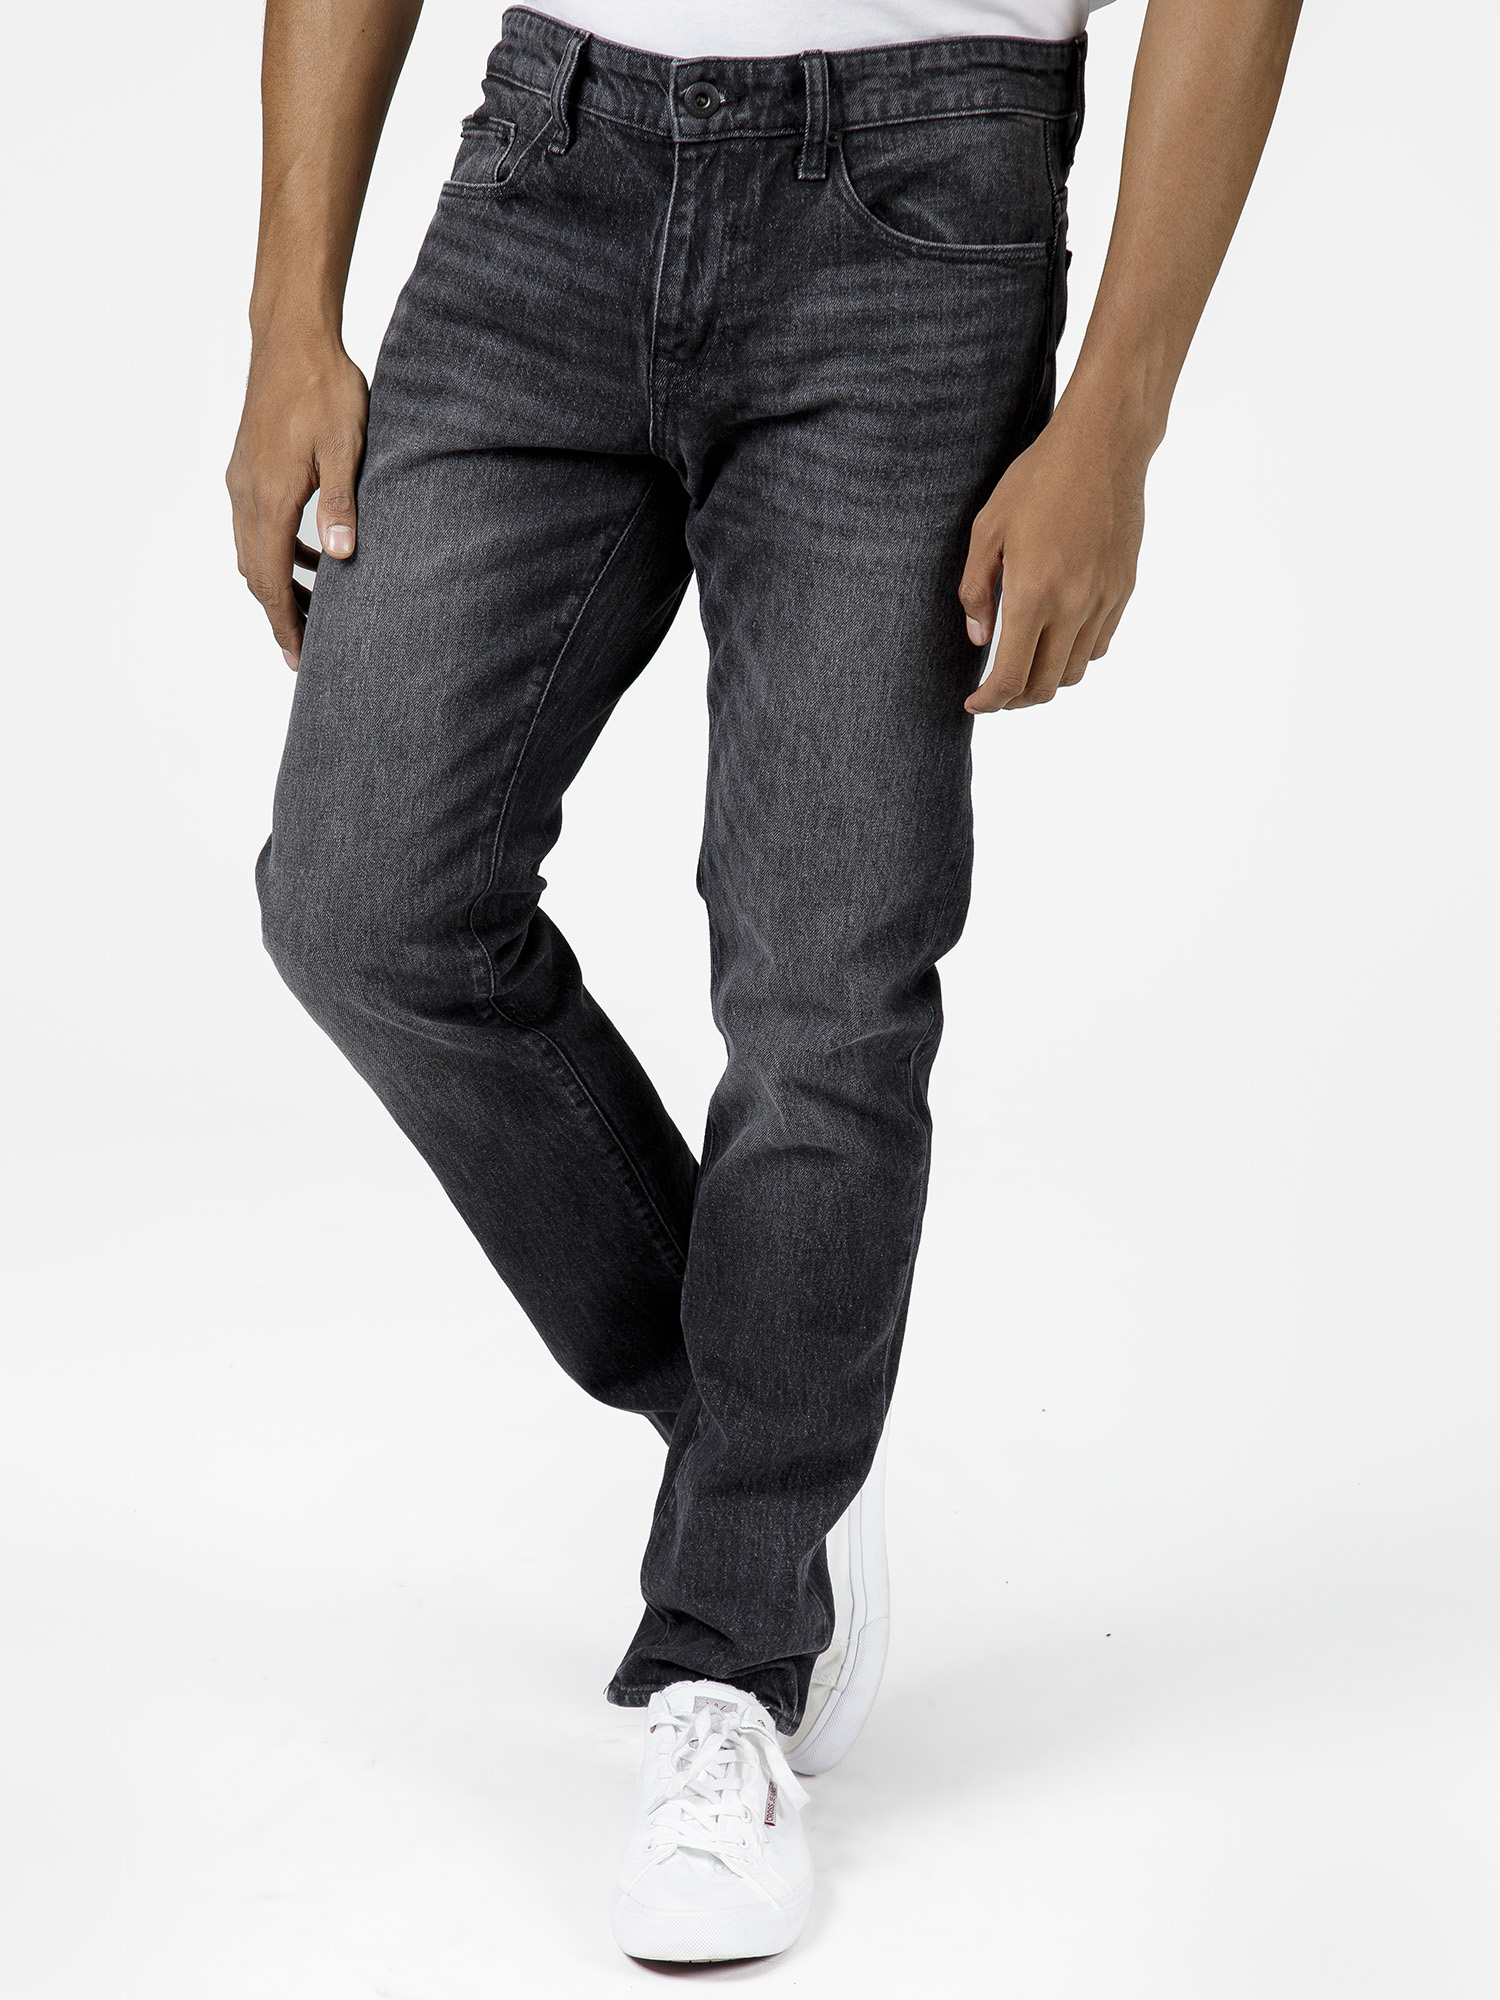 Джинсы Cross Jeans для мужчин, F 152-110, размер 29-32, чёрные